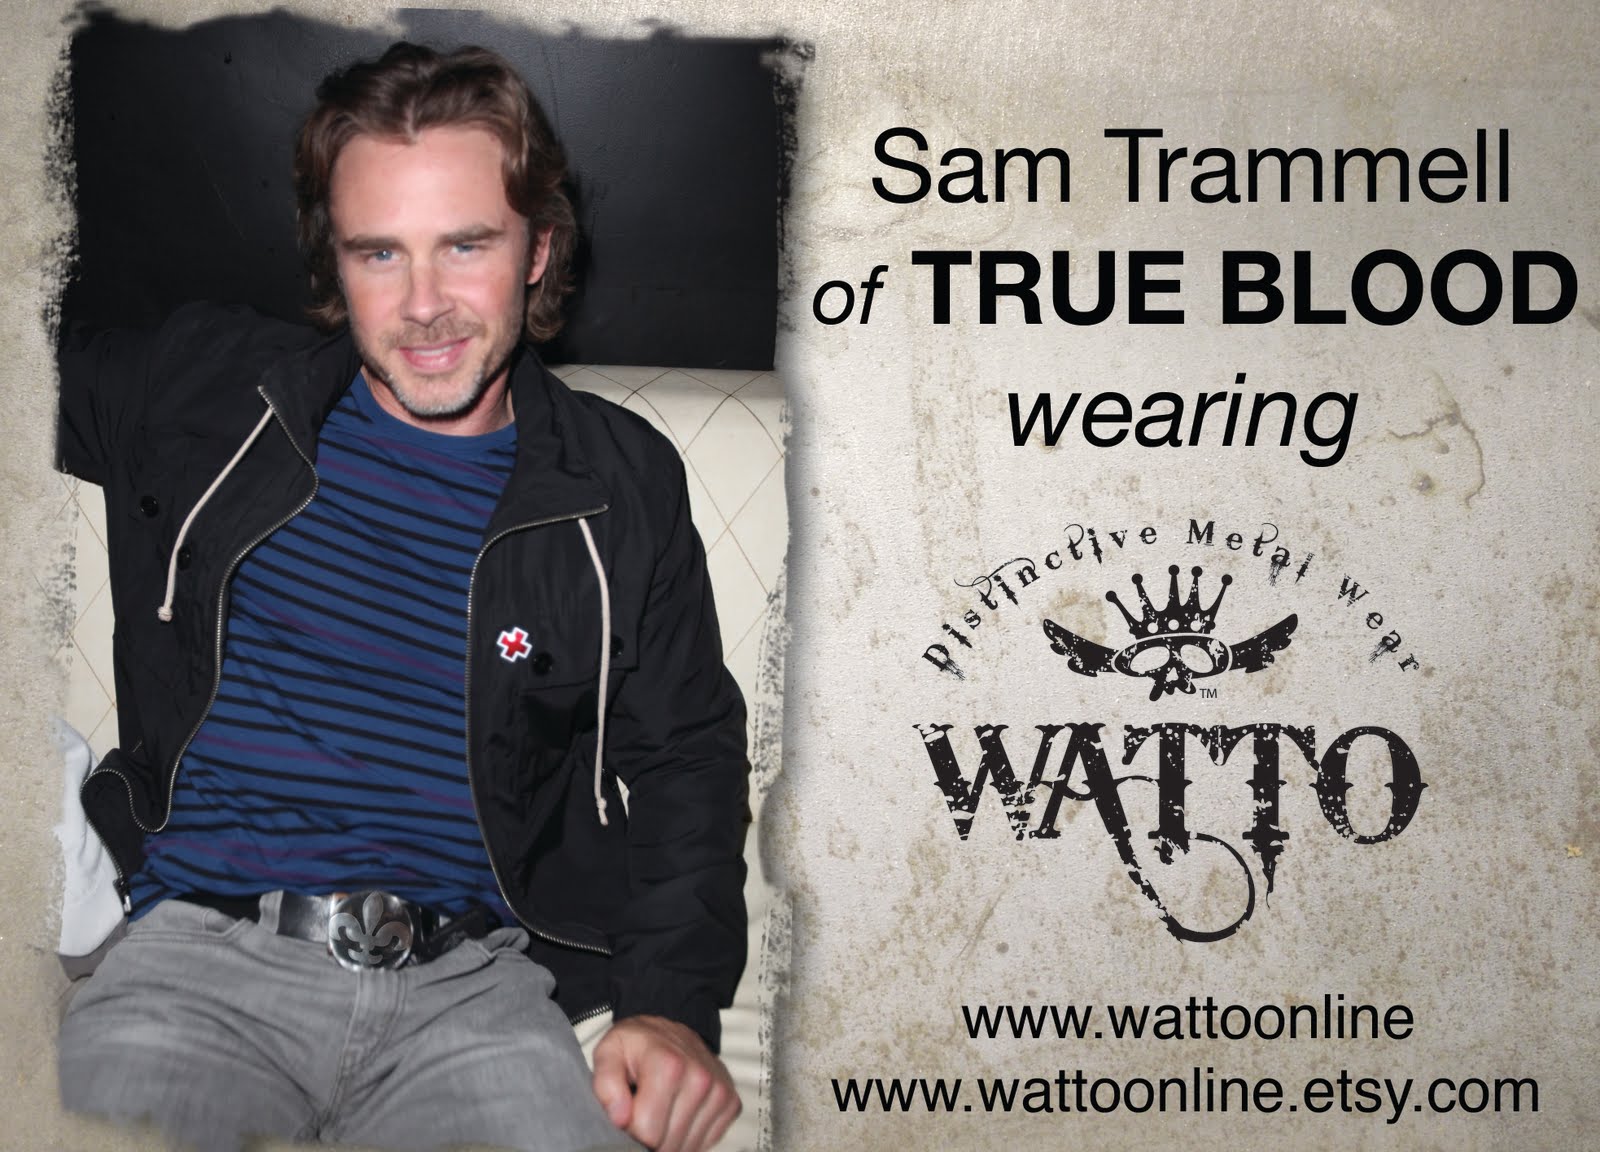 Sam Trammell of True Blood in